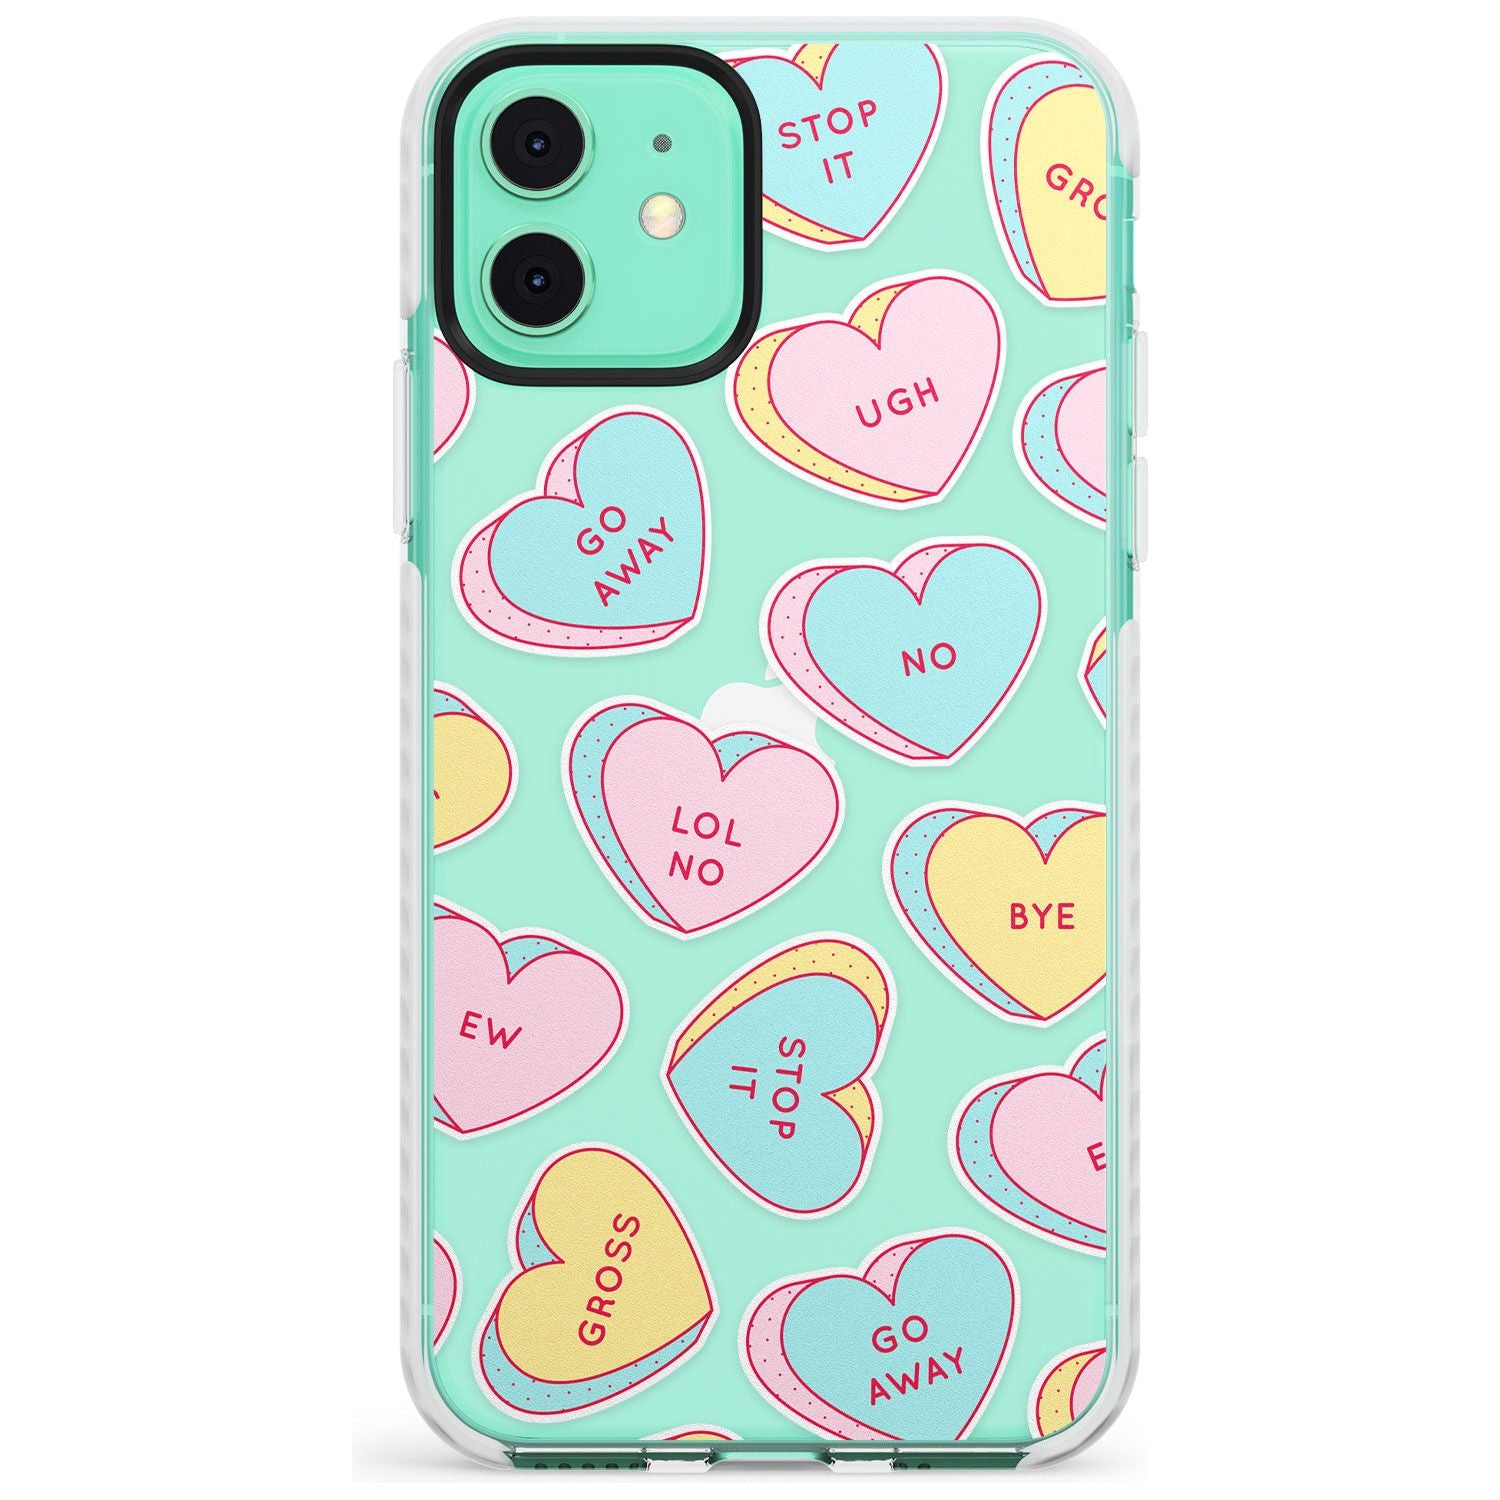 Sarcastic Love Hearts Slim TPU Phone Case for iPhone 11